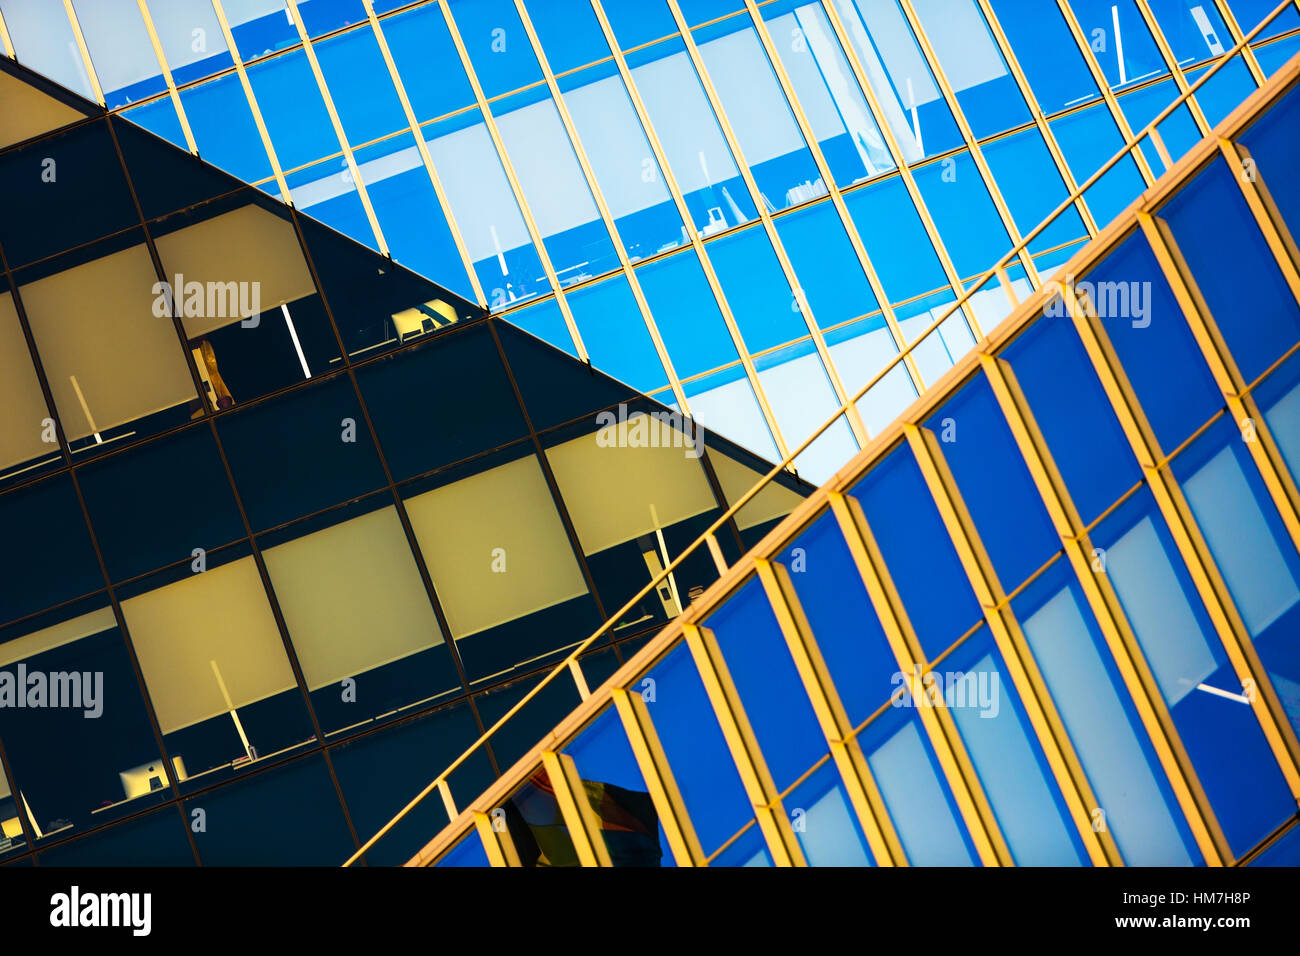 USA, New York, New York City, Geometric shapes of glass facade Stock Photo